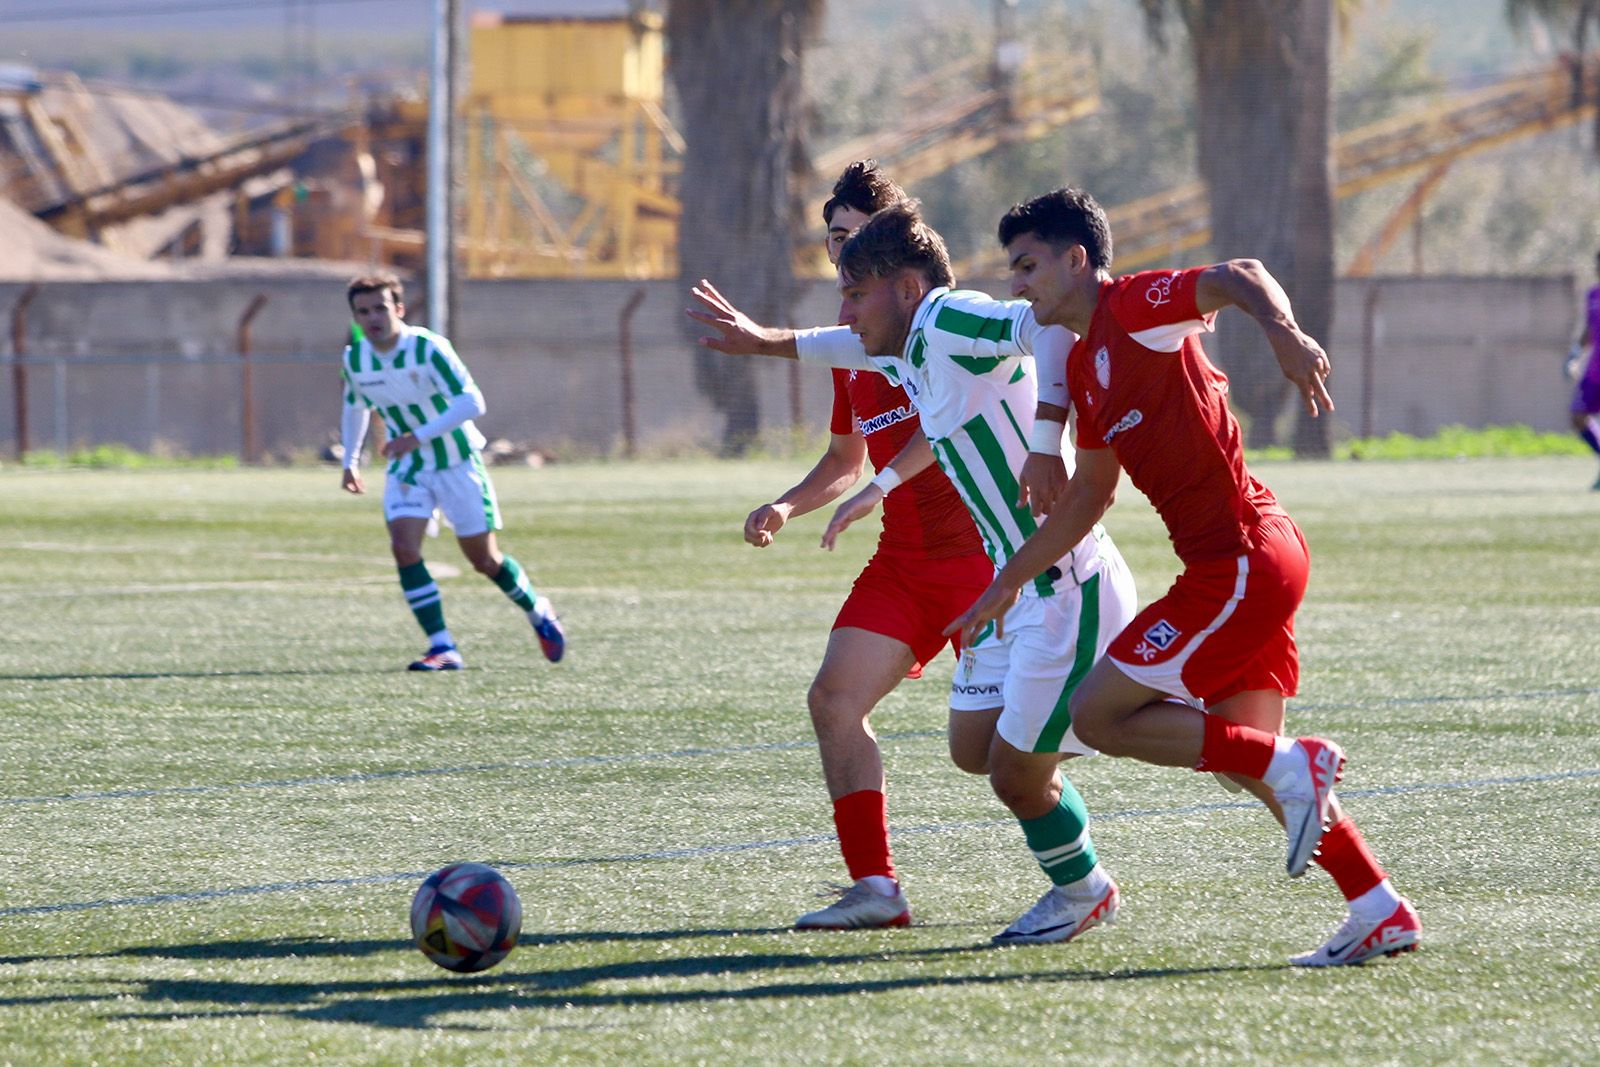 Córdoba CF B - La Palma: el partido de Tercera, en imágenes